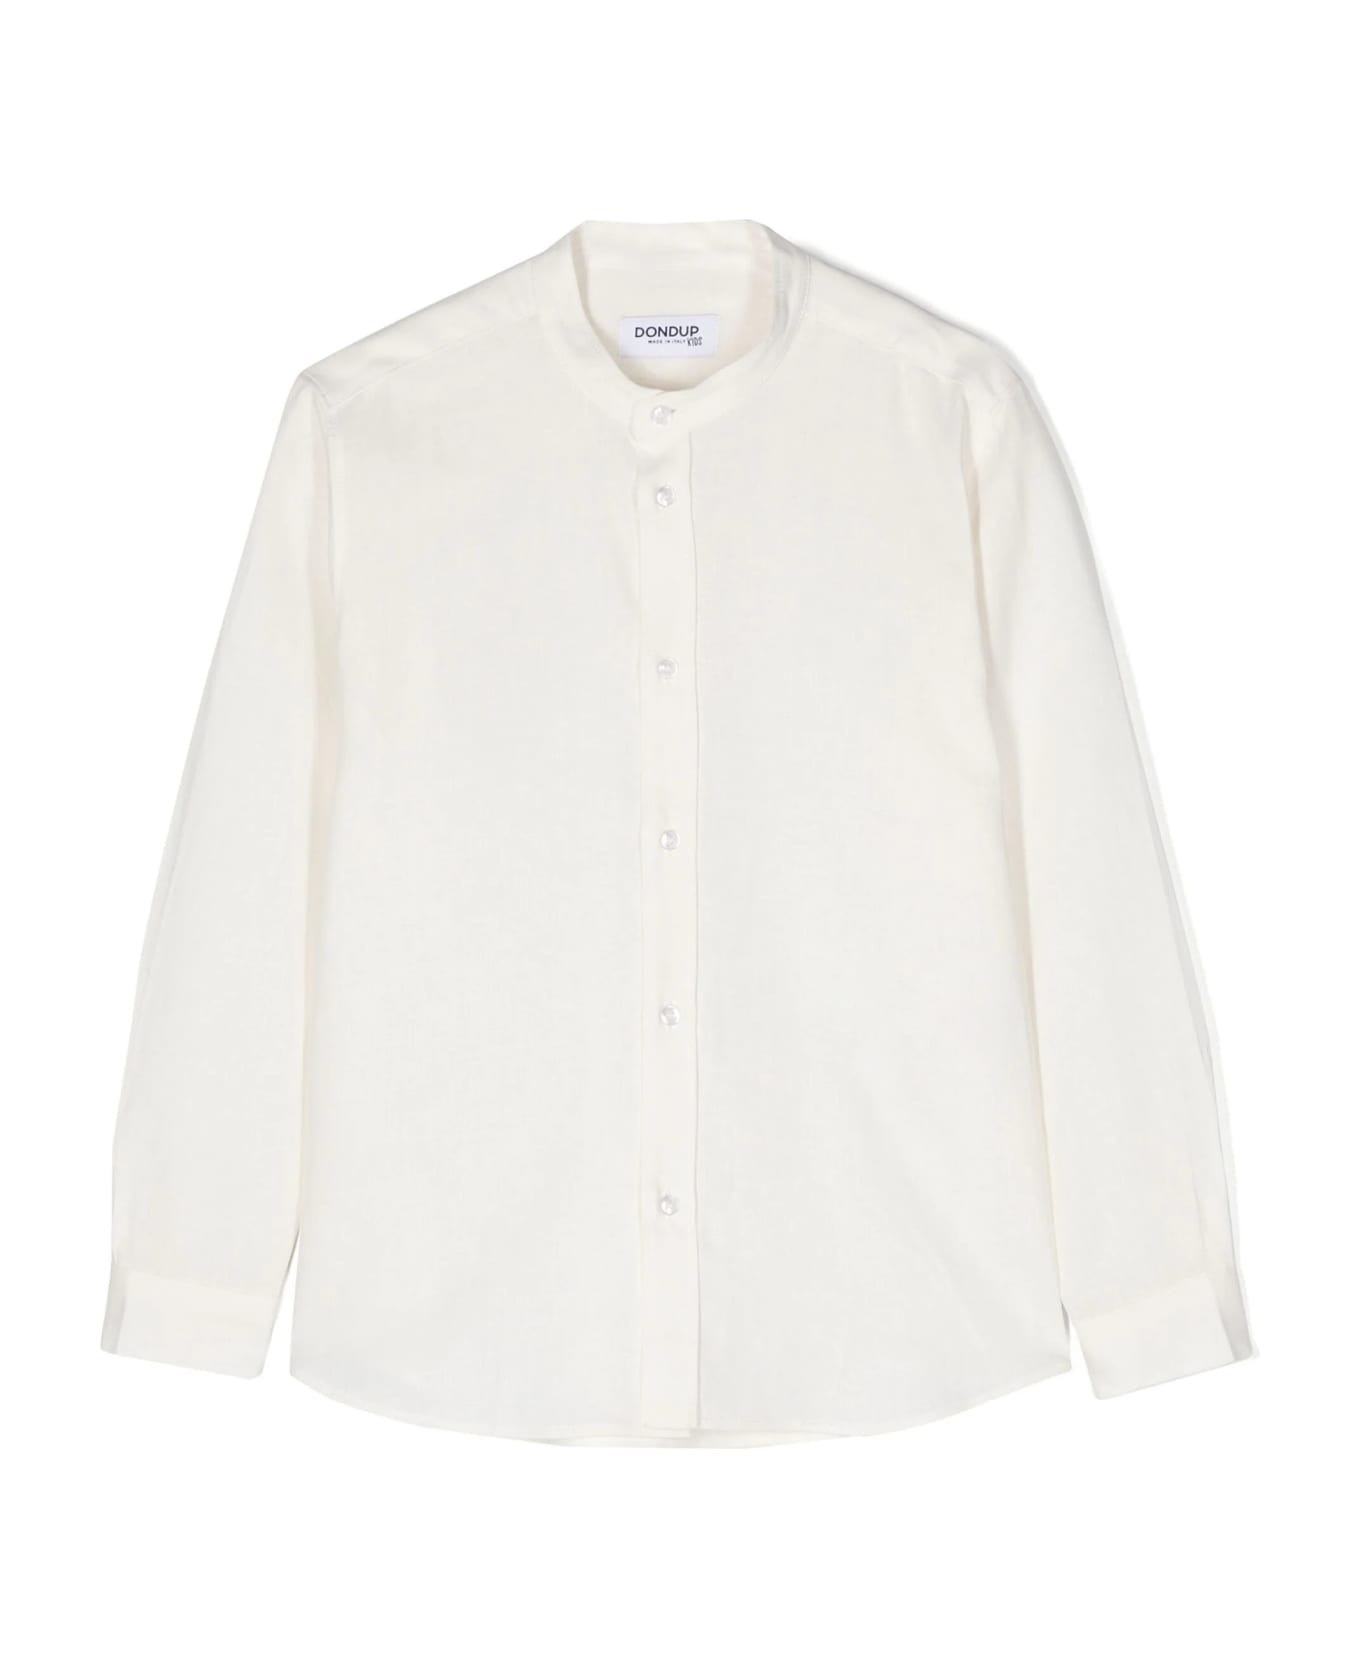 Dondup White Linen Blend Shirt With Mandarin Collar - White